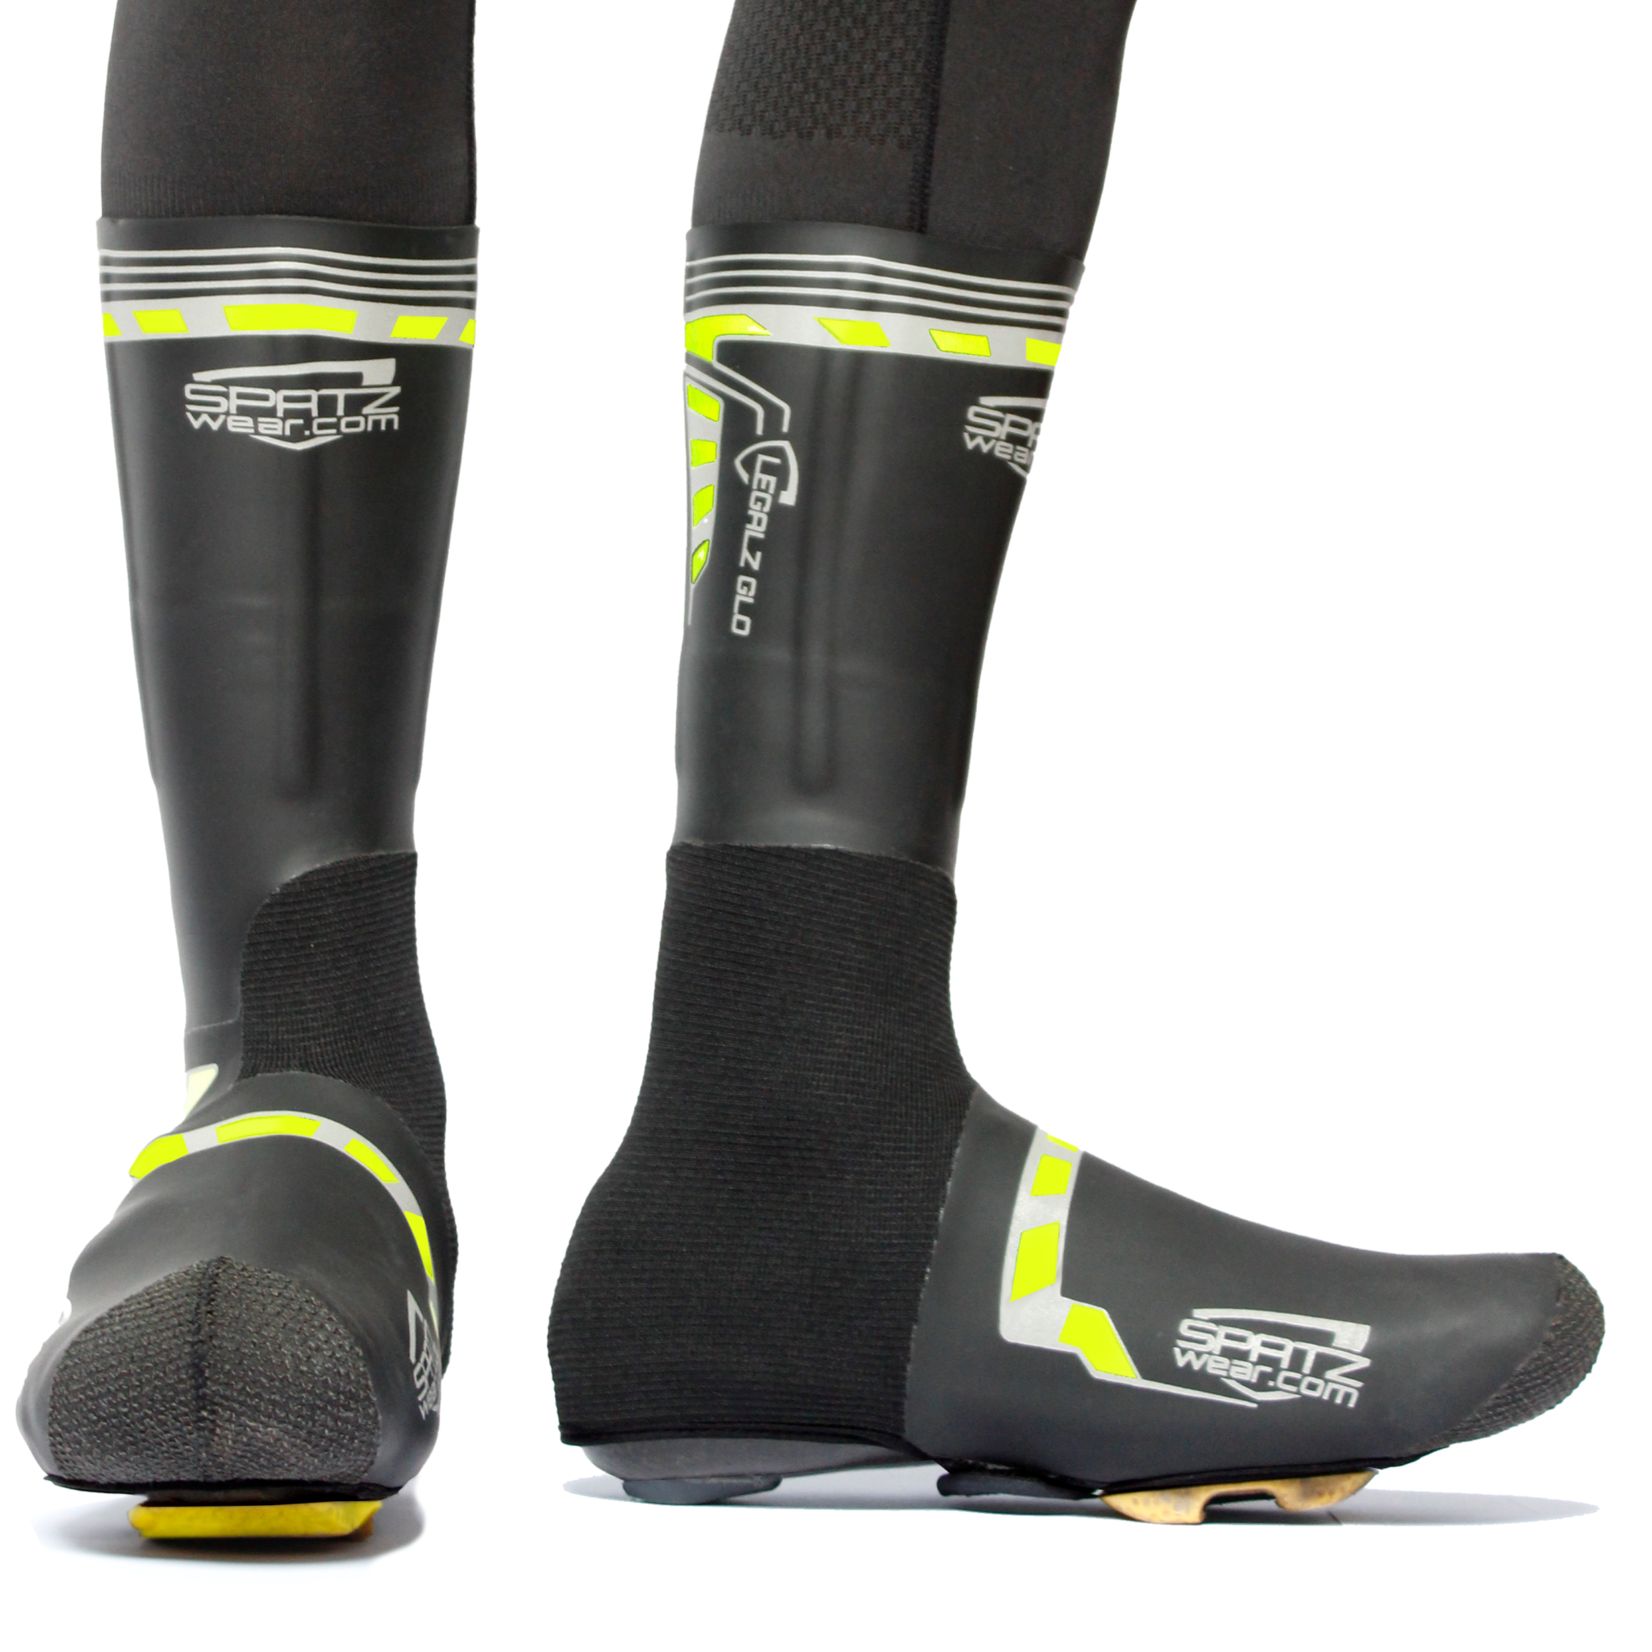 Spatz SPATZ Legalz GLO UCI Legal Race Overshoes with High Viz Reflective Detailing